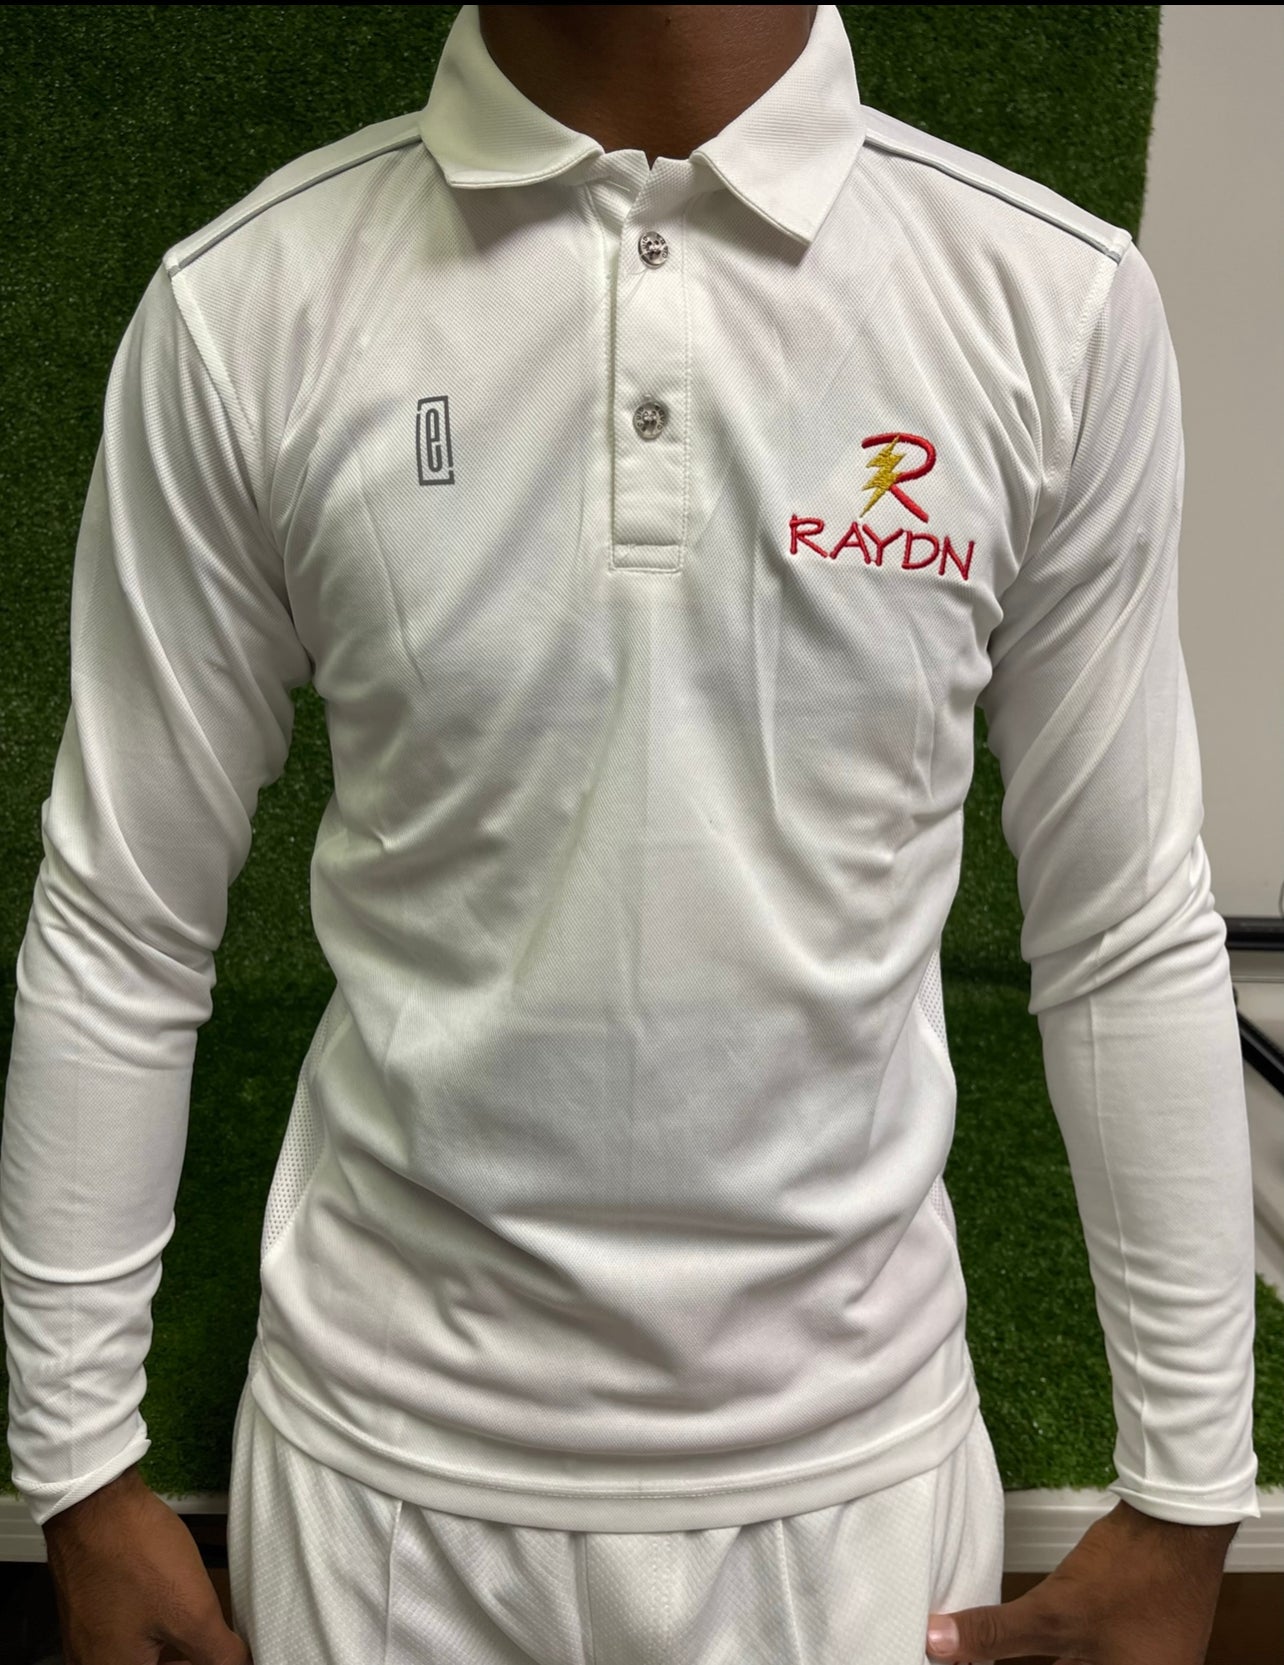 Raydn Cricket White Full Sleeve Shirt / TShirt